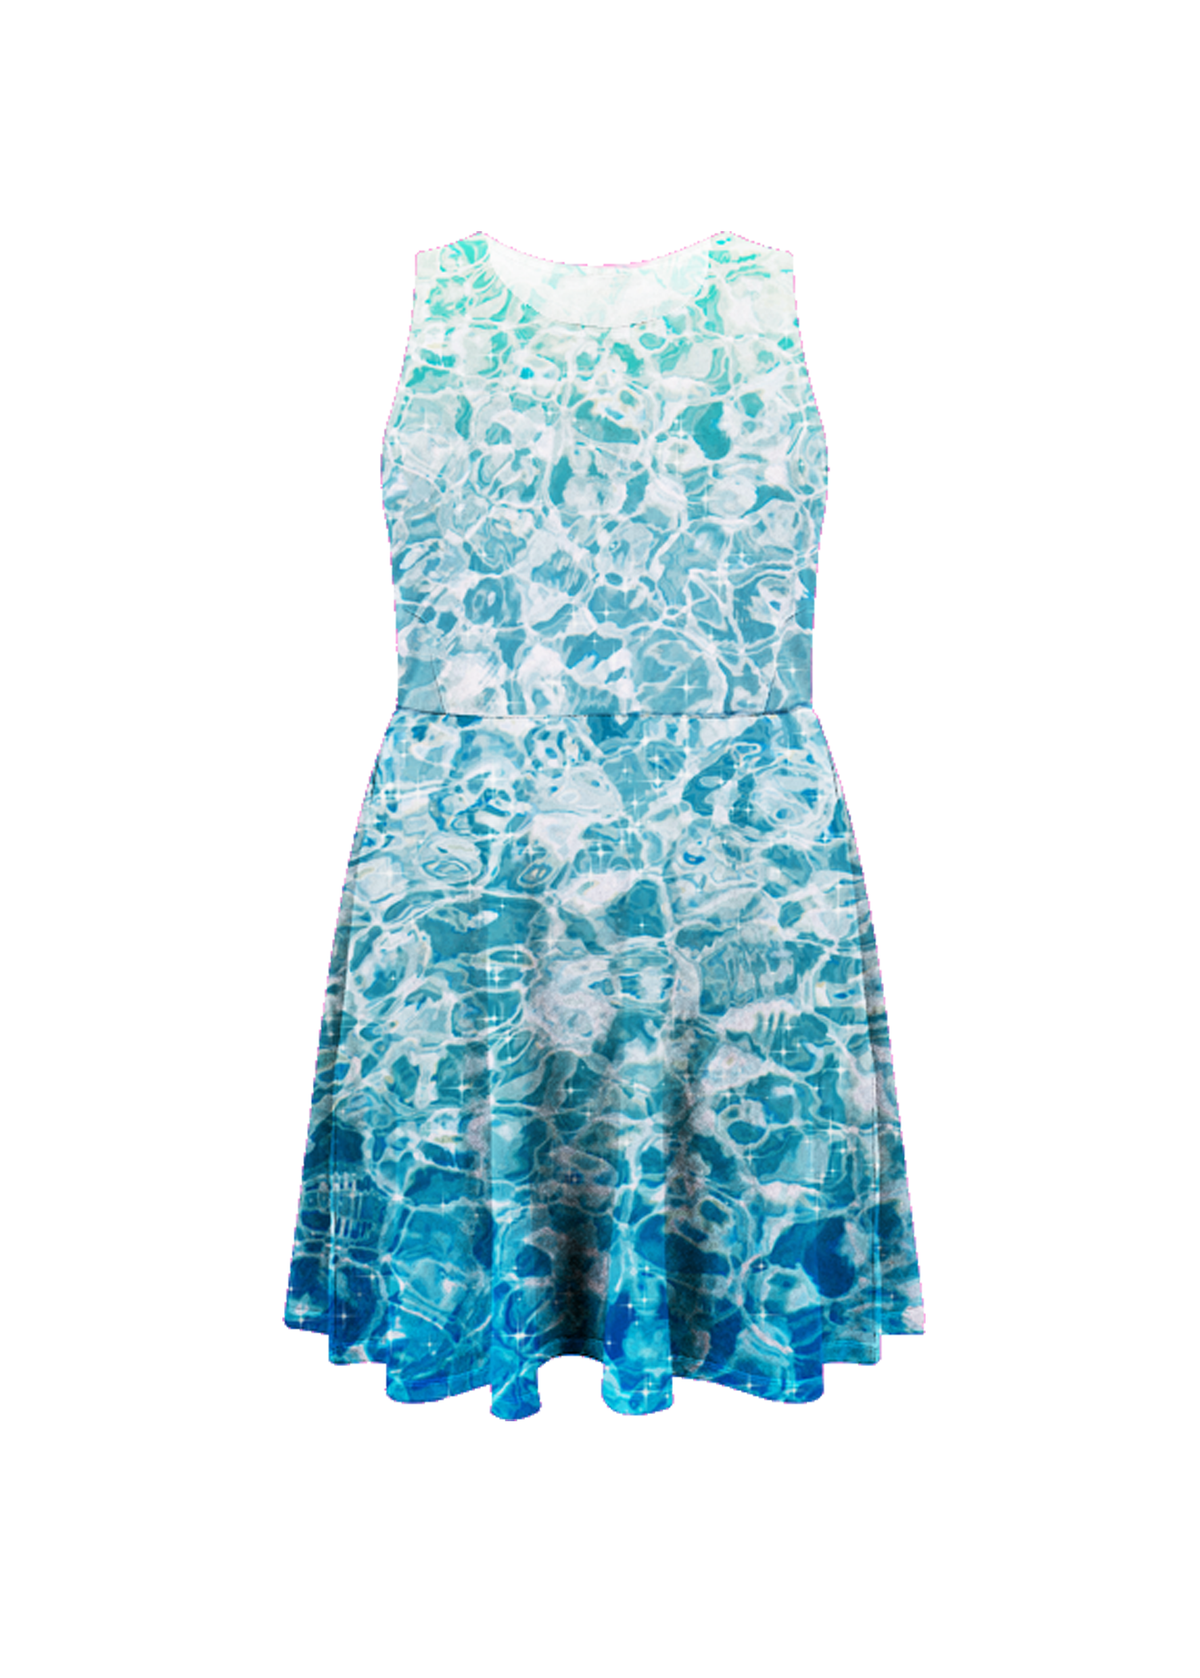 sparkling water dress